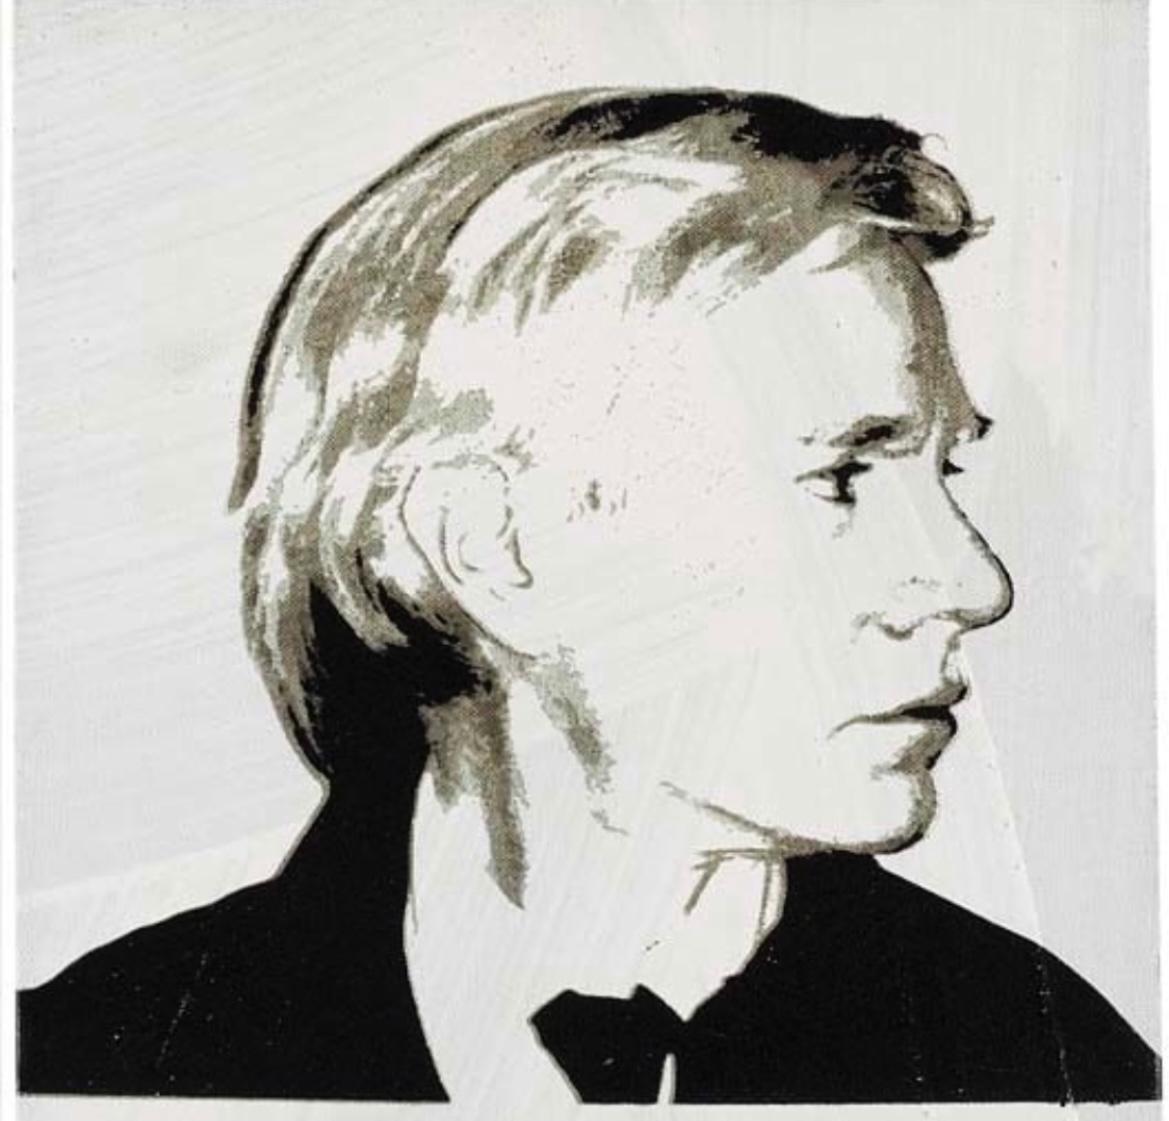 Self-Portrait, 1979  - Print by Andy Warhol